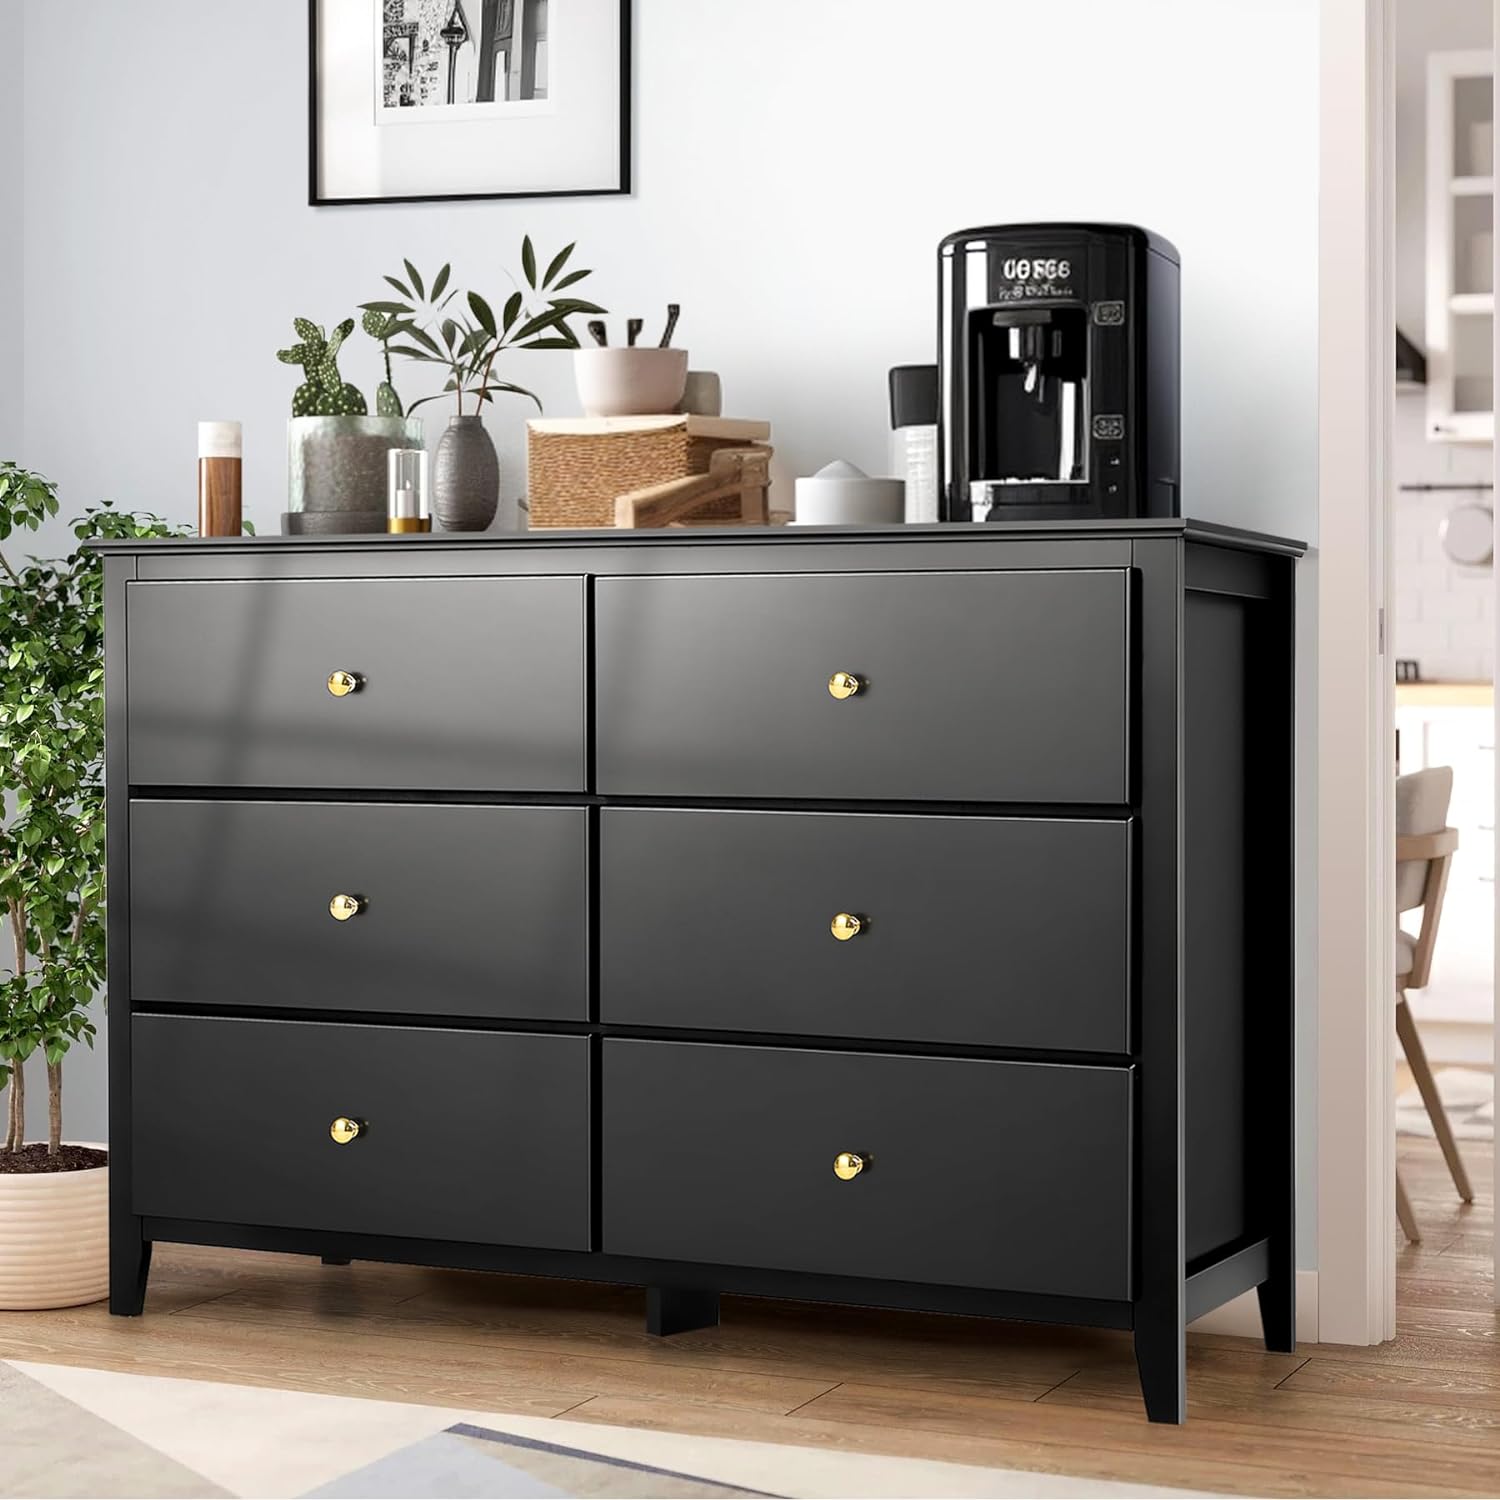 SEJOV 6 Drawer Dresser,Wood Chest Of Drawers W/Storage,Clothing Organizer W/Round Handle,Storage Cabinet, Nightstand For Living Room